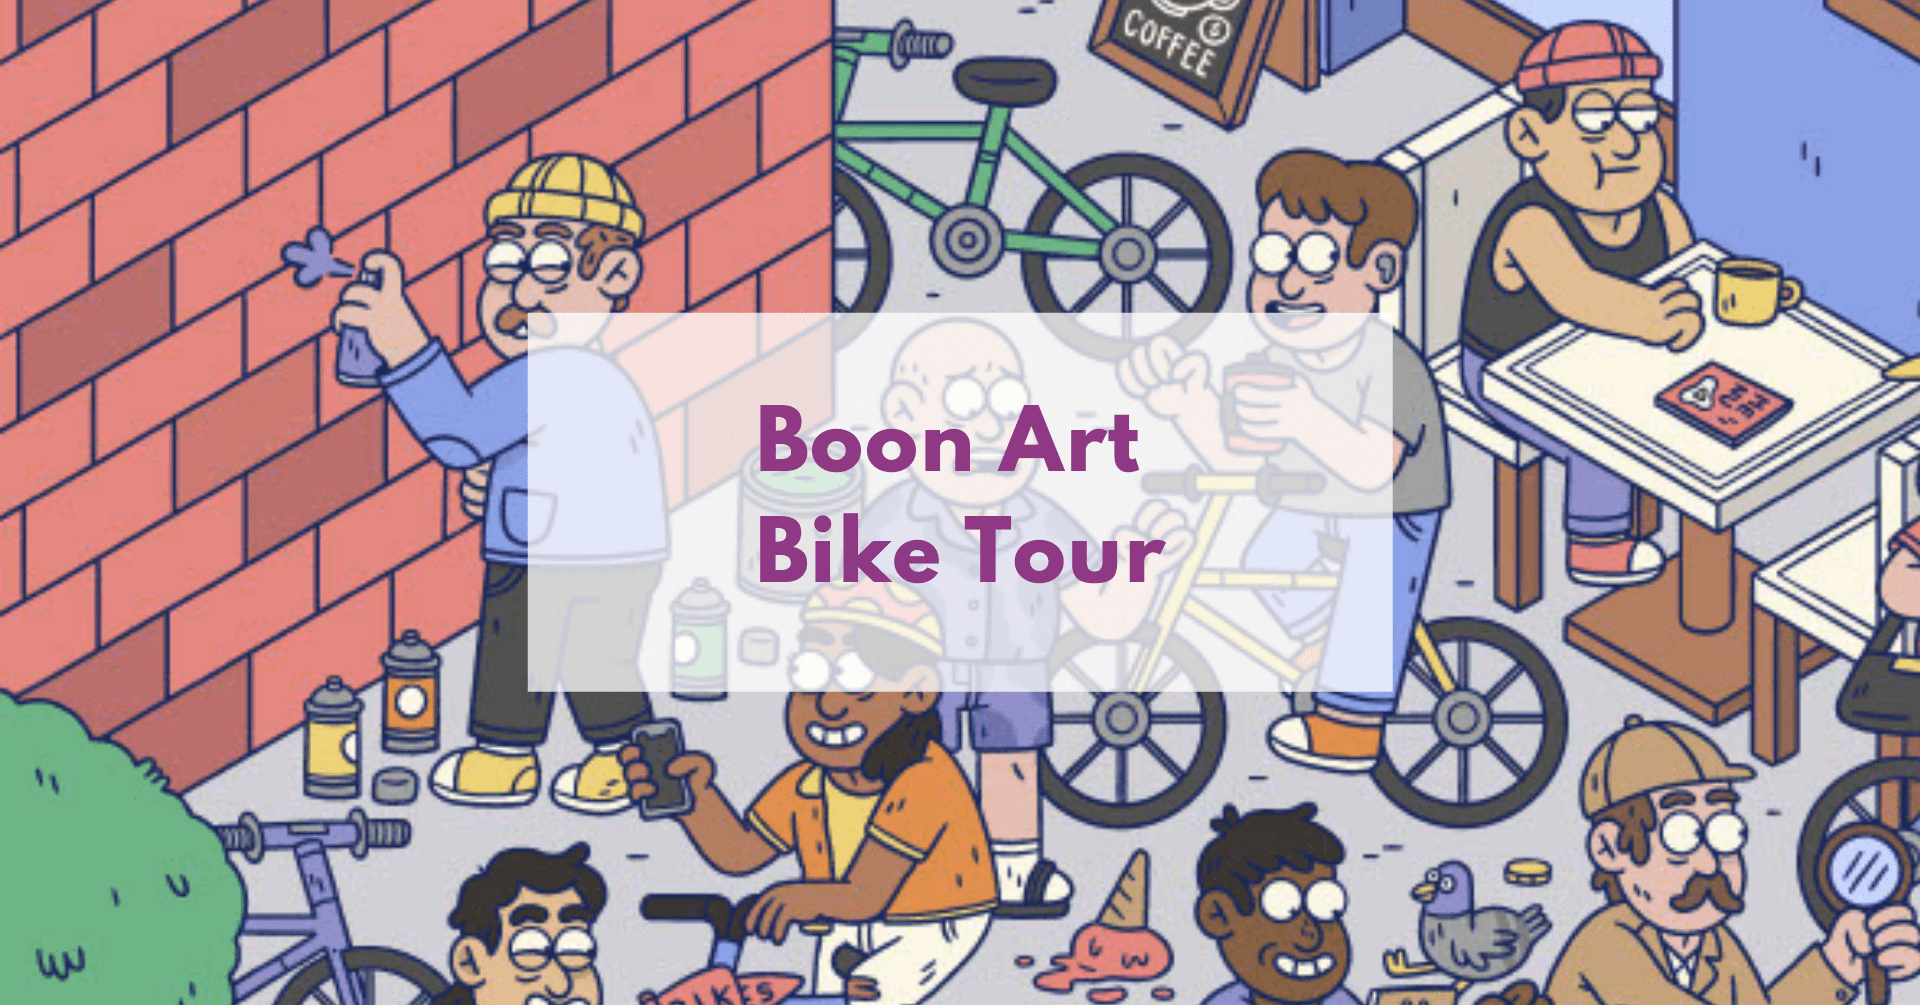 Boon Art Bike Tour illustration